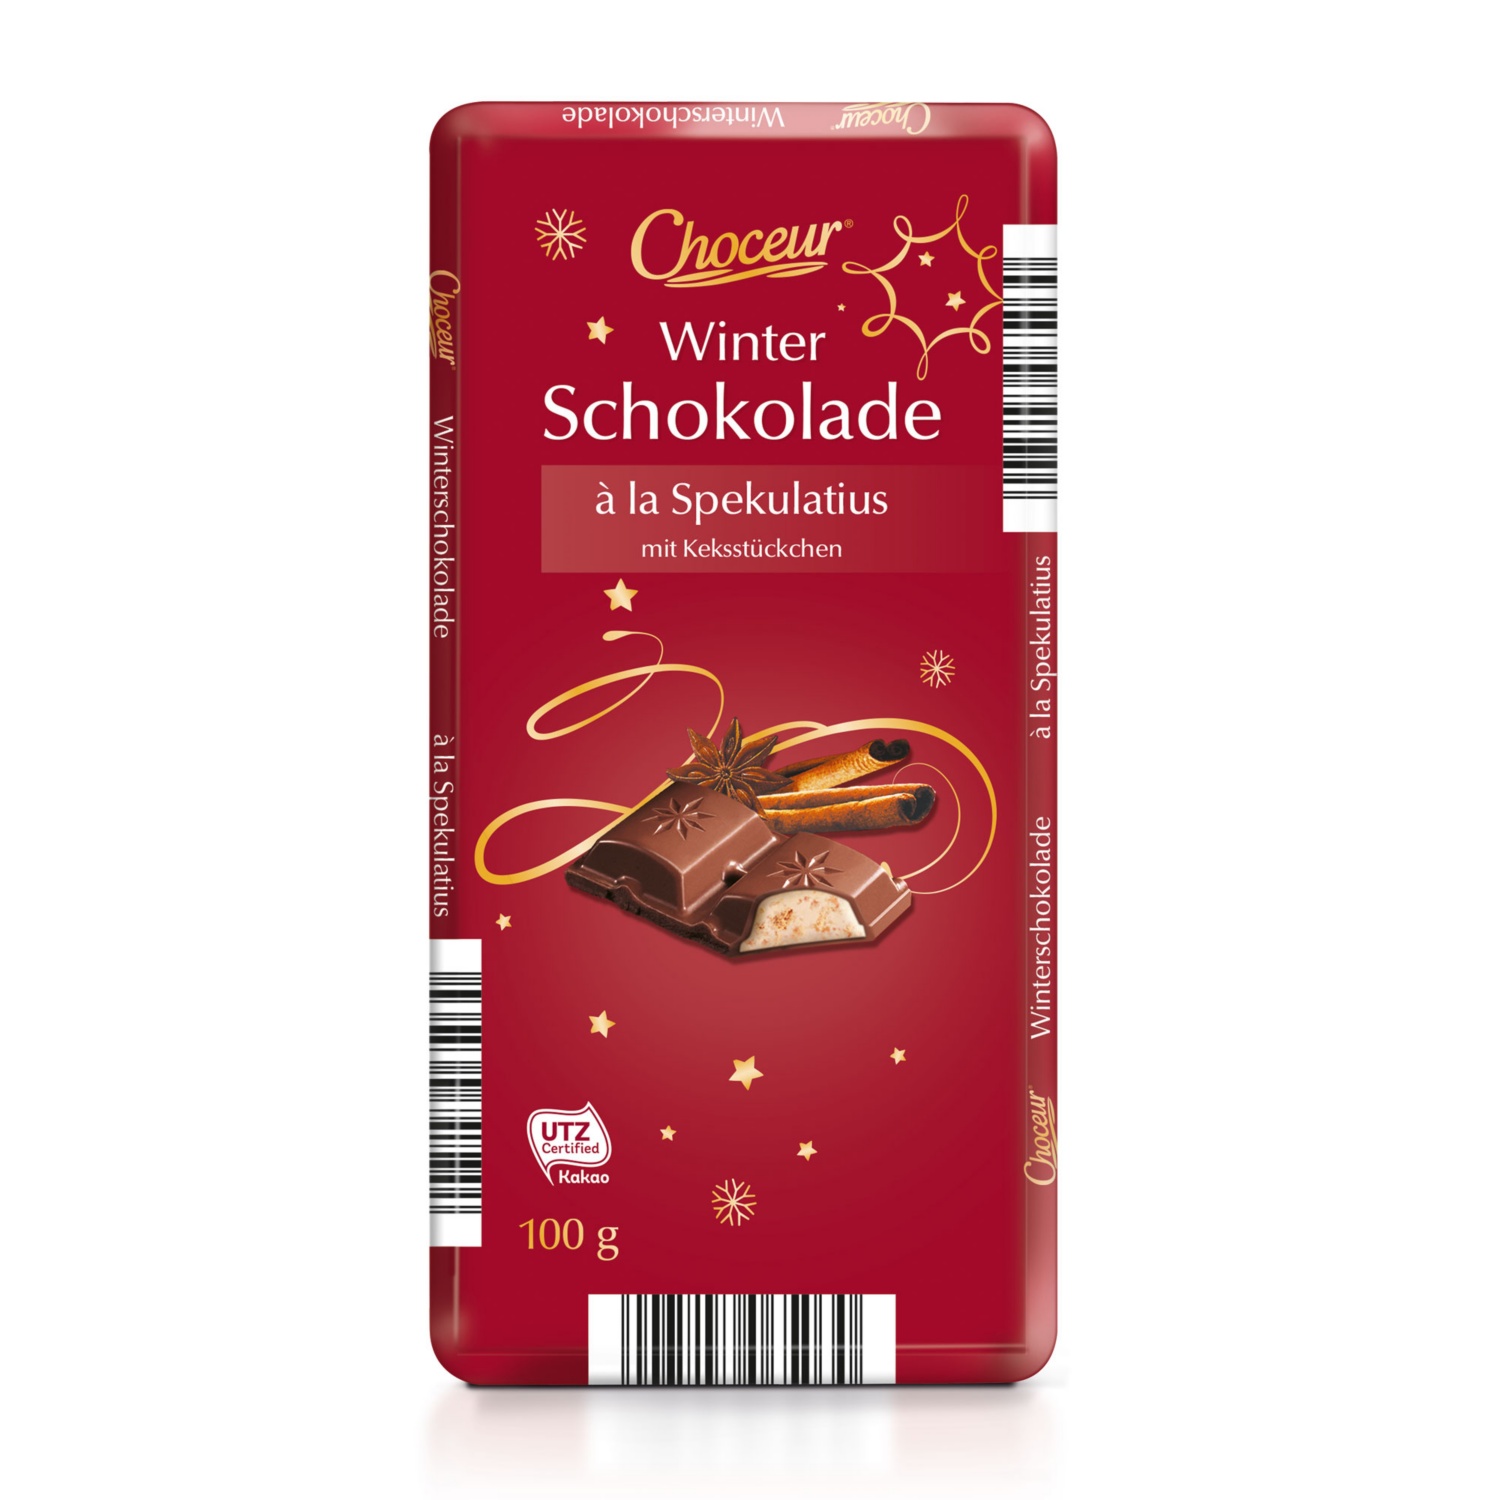 CHOCEUR Winterschokolade, Spekulatius